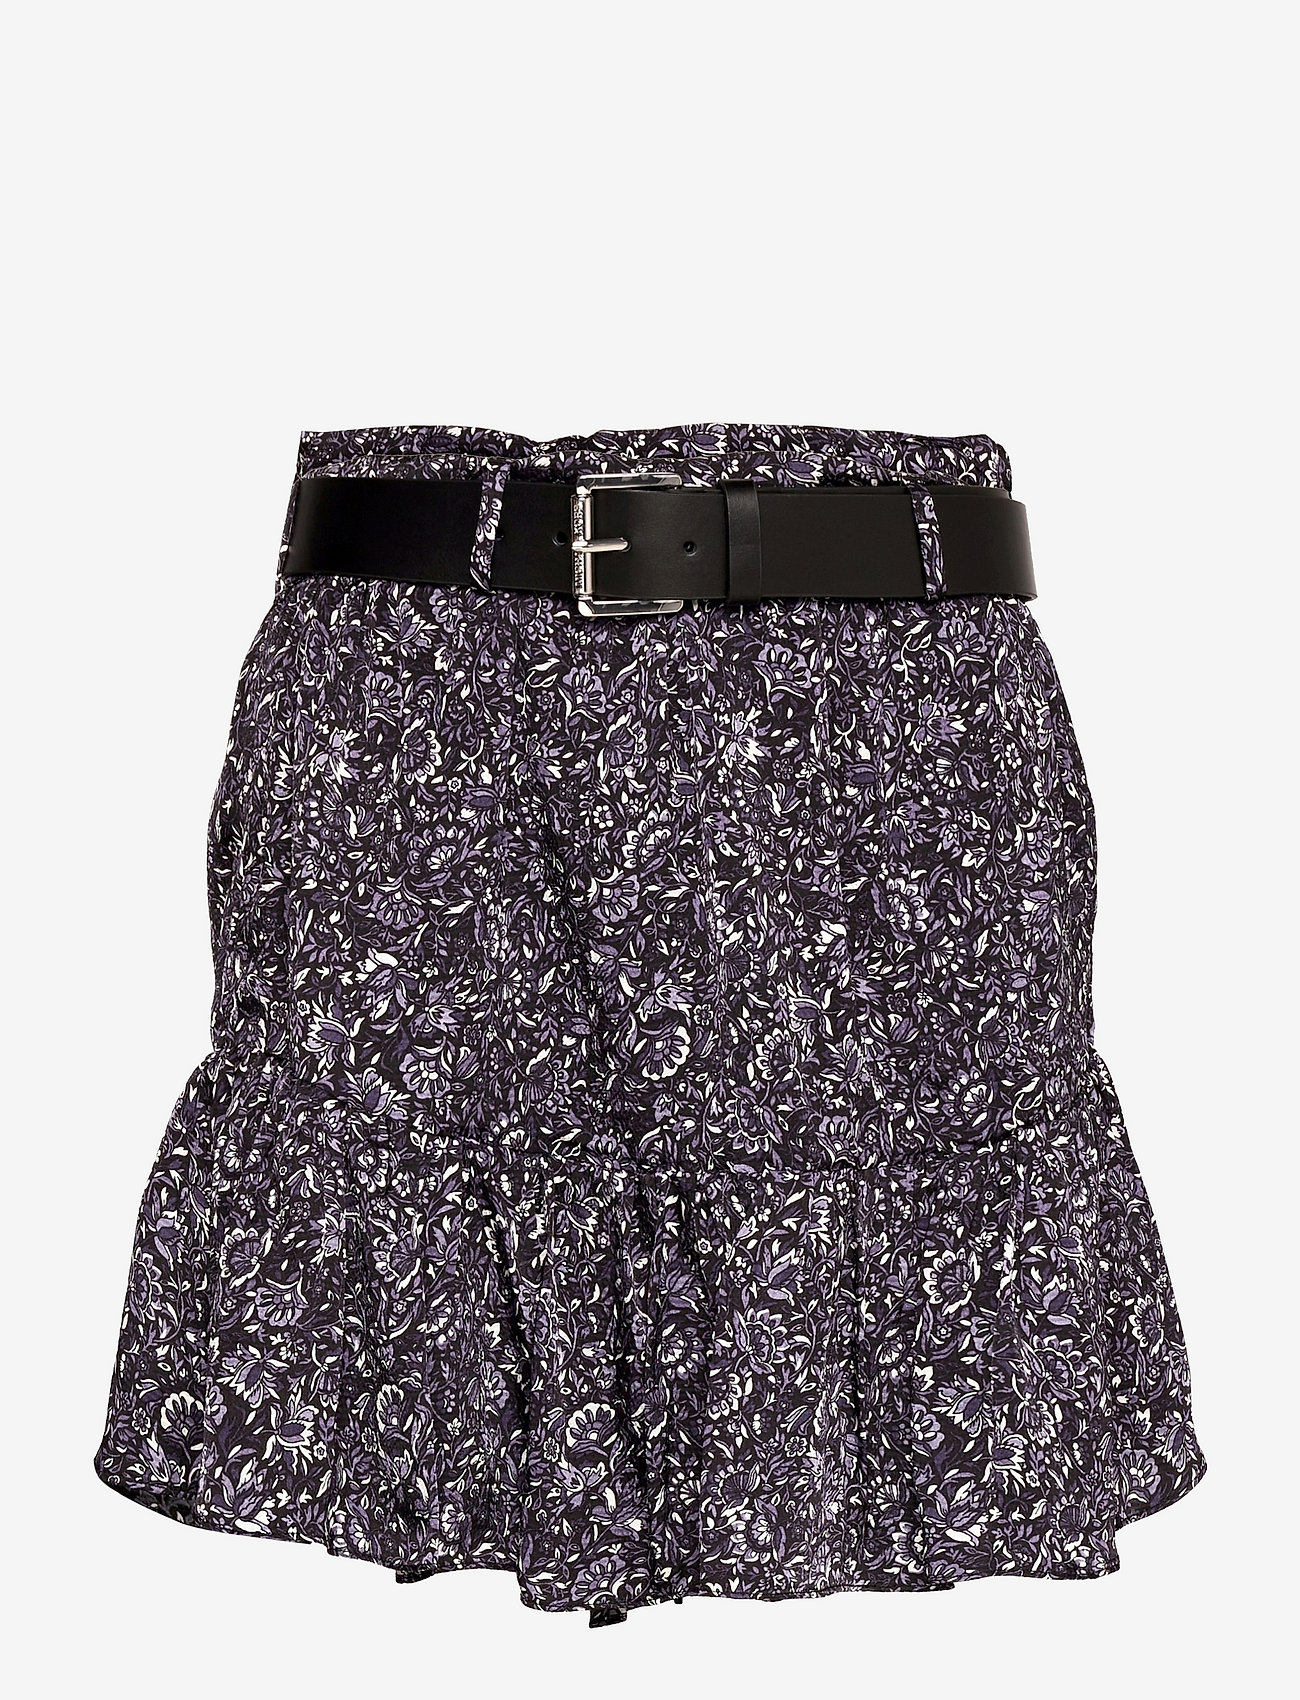 Michael Kors - HIPPIE FLWR MINI SKIRT - short skirts - deep purple - 0